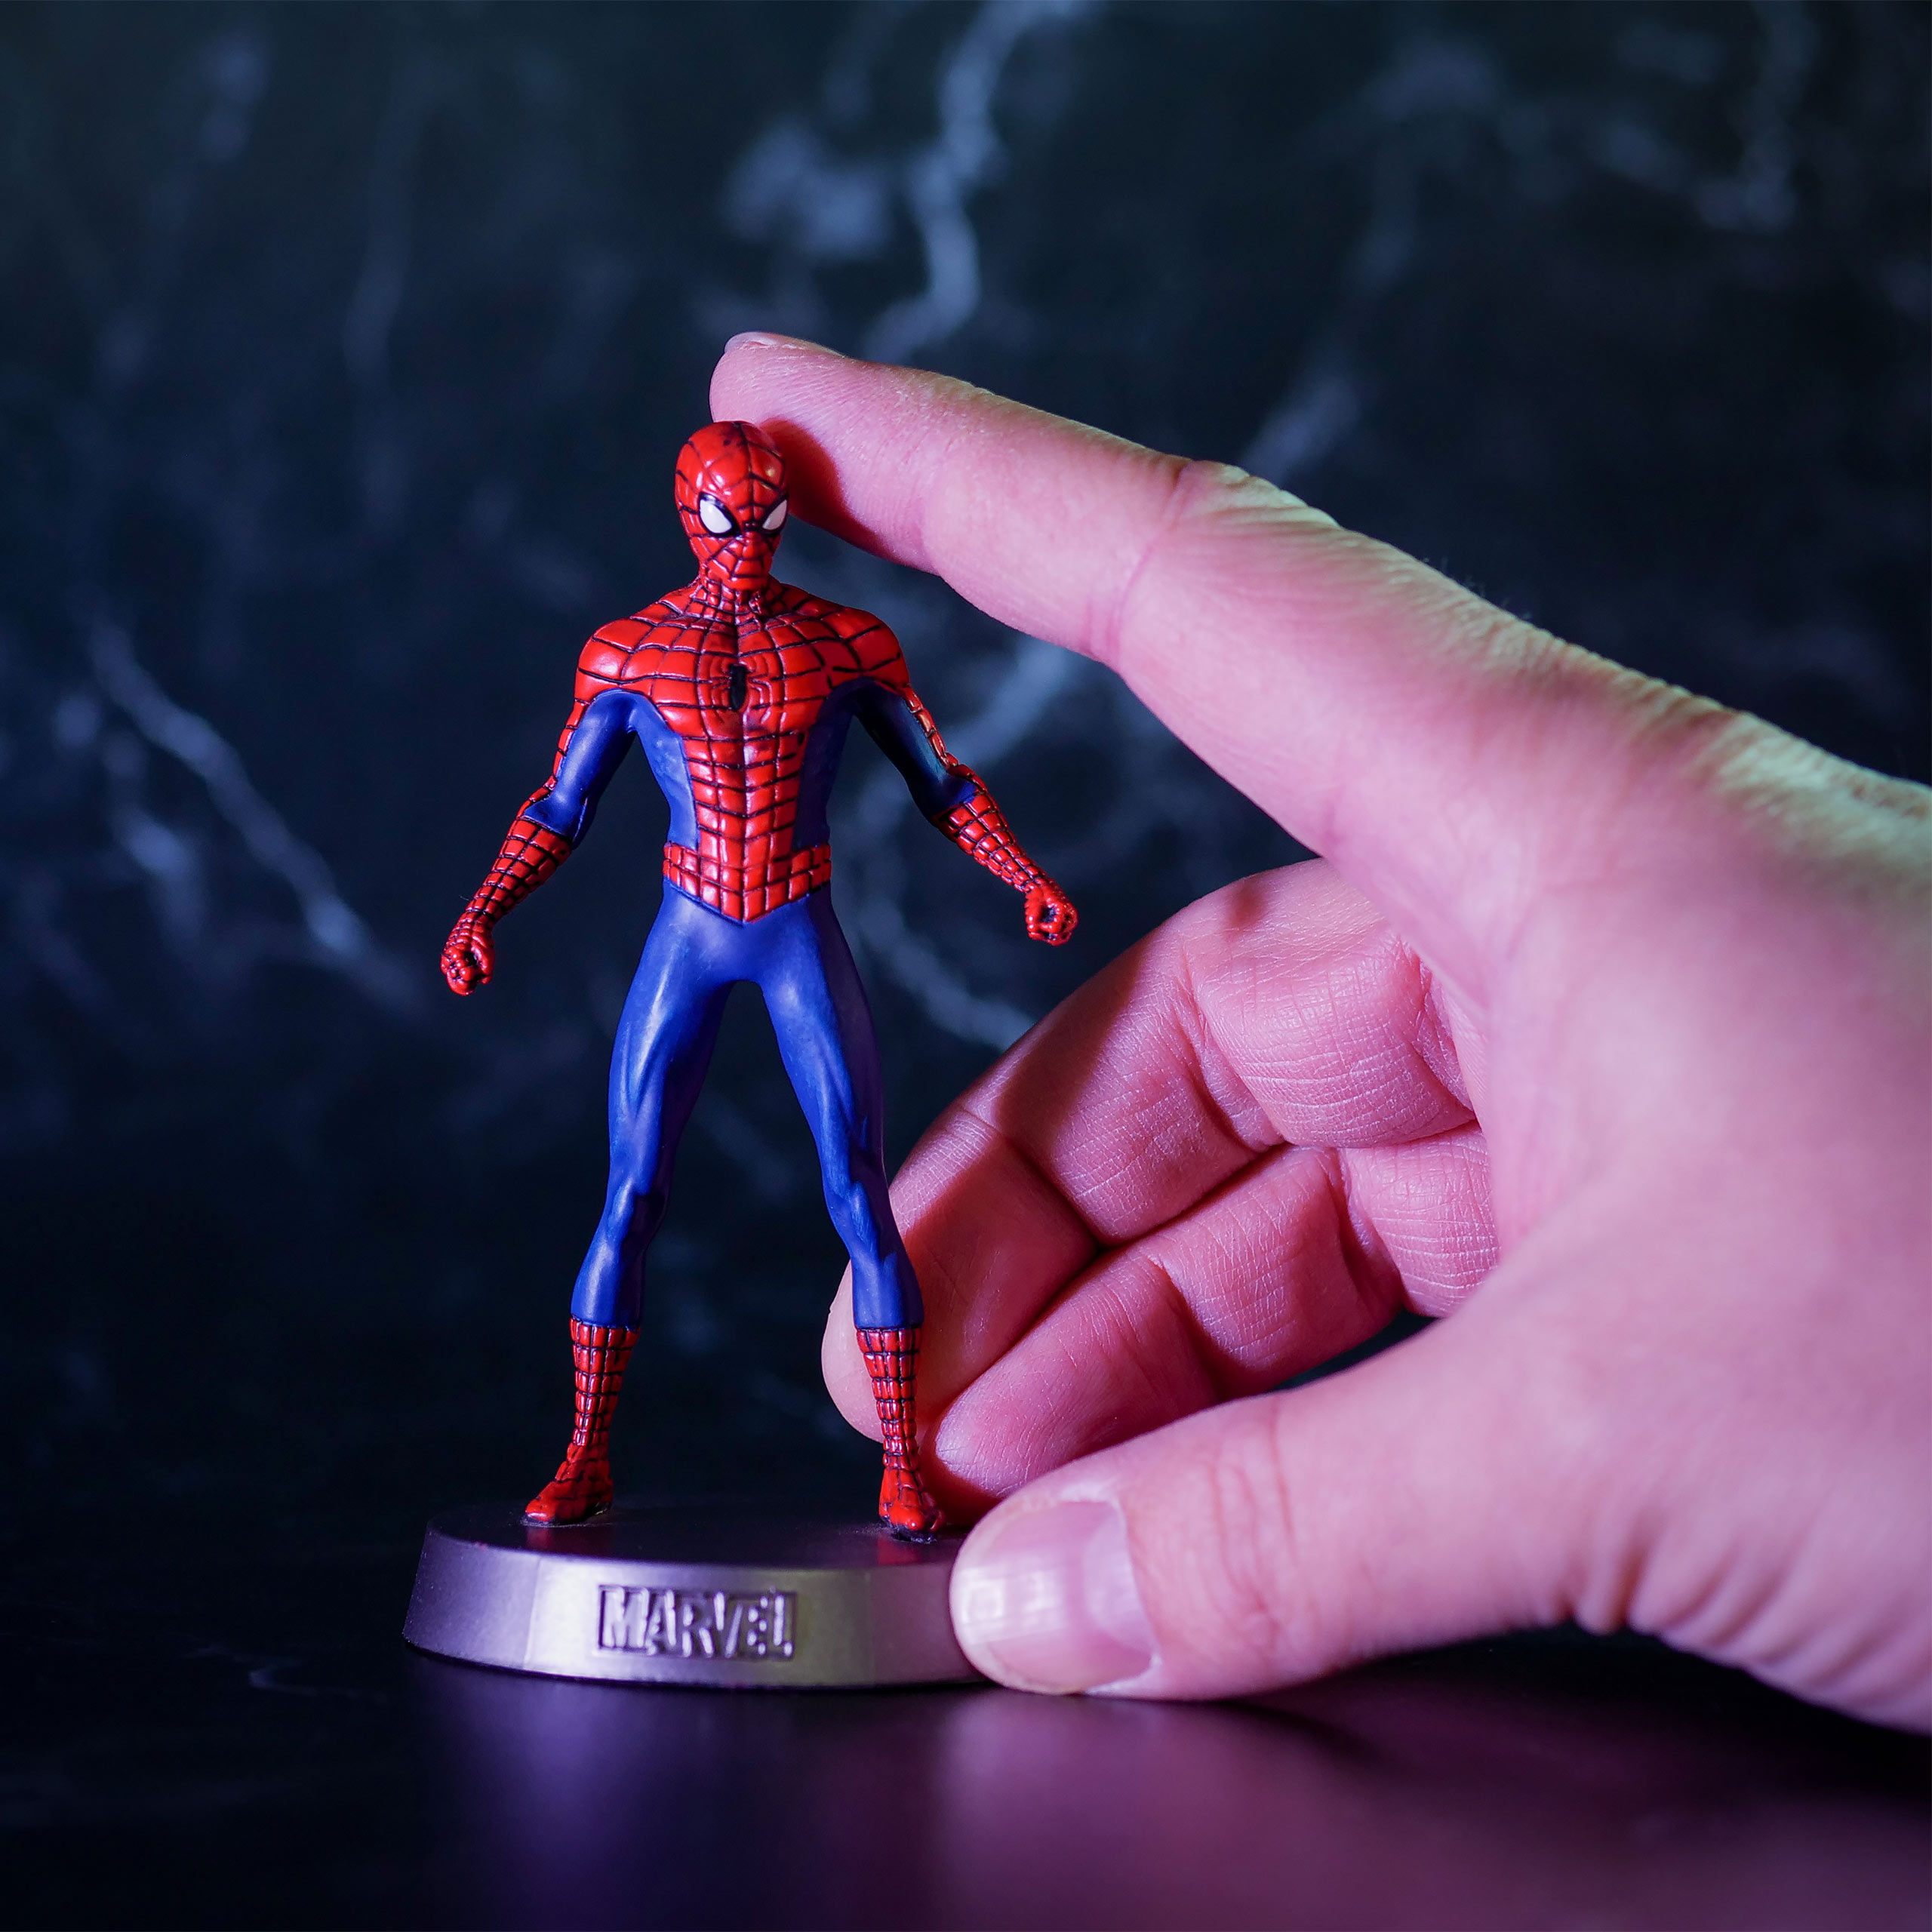 Spider-Man - Figurine en métal Heavyweights dans une boîte de collection